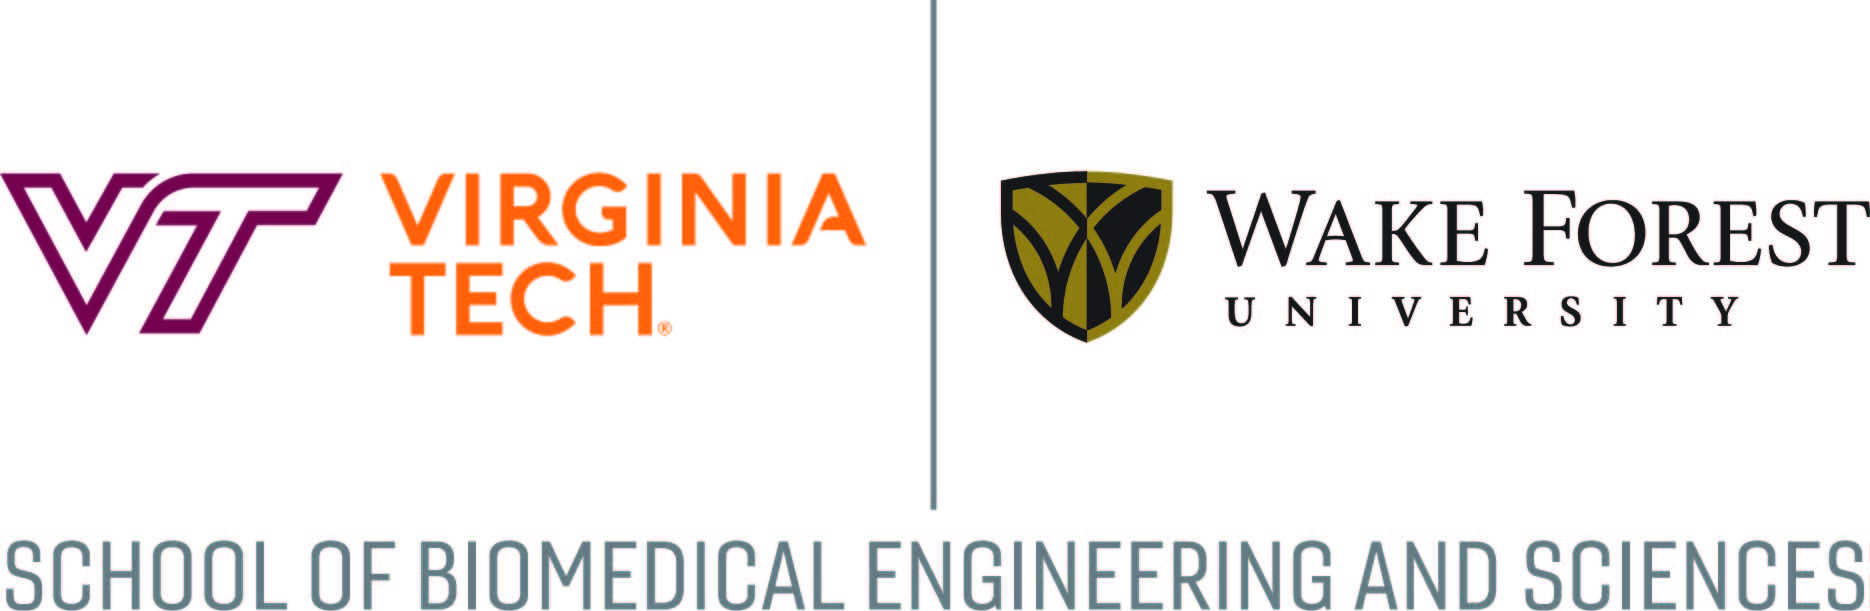 Virginia Tech - Wake Forest University logo